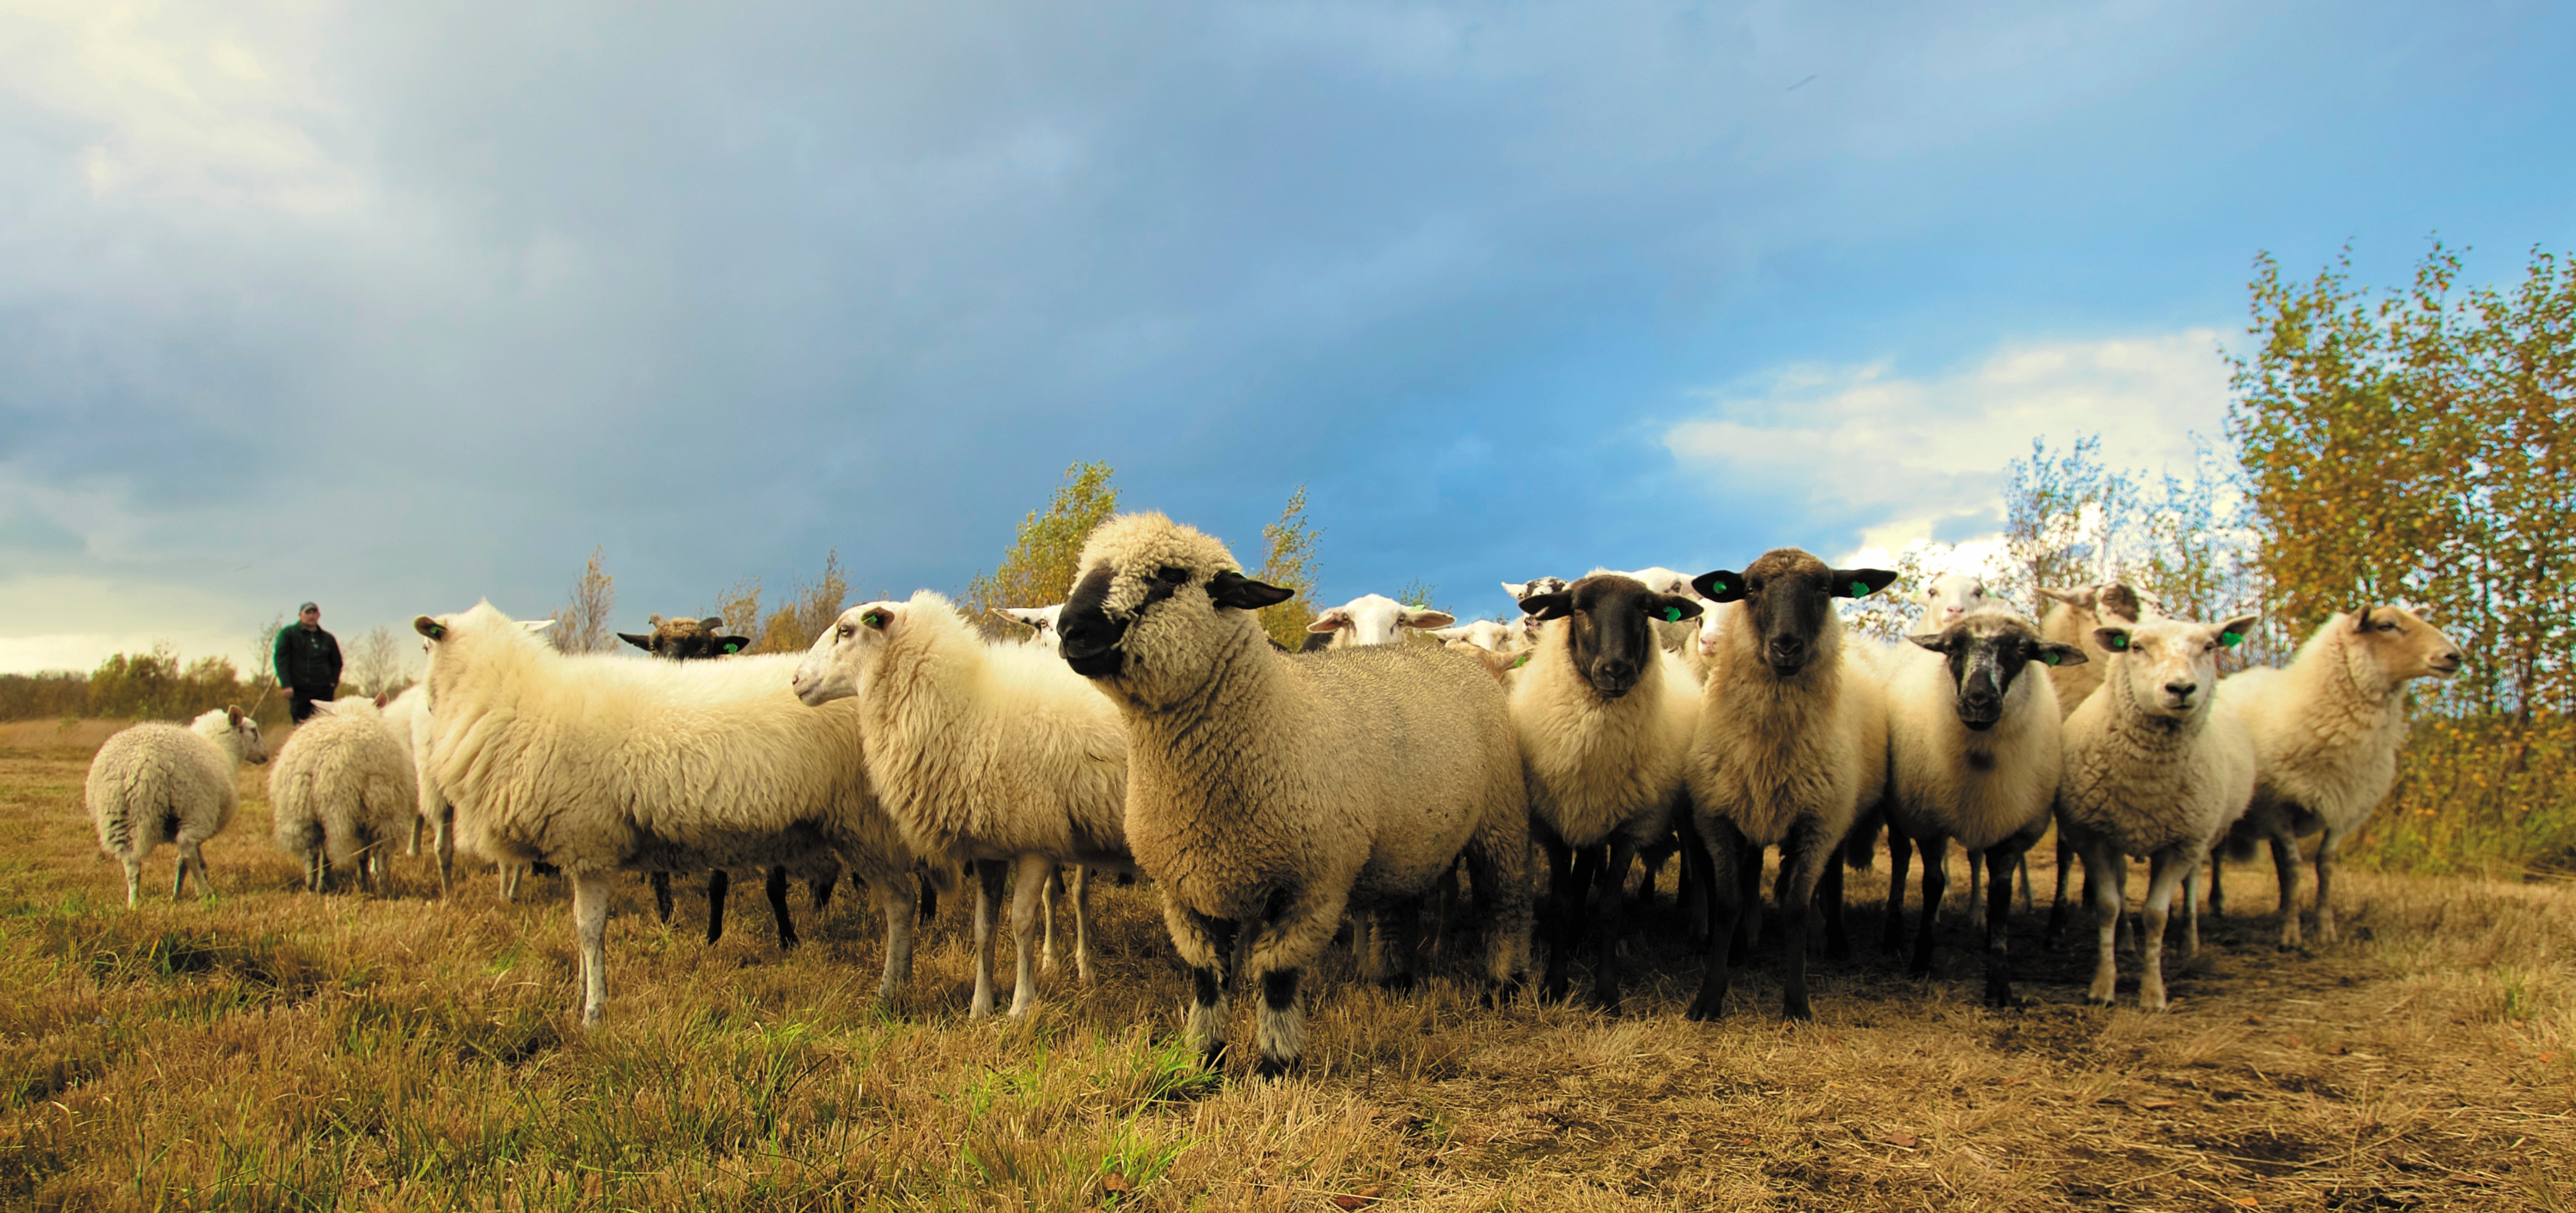 Flock of sheep in field under blue sky photo